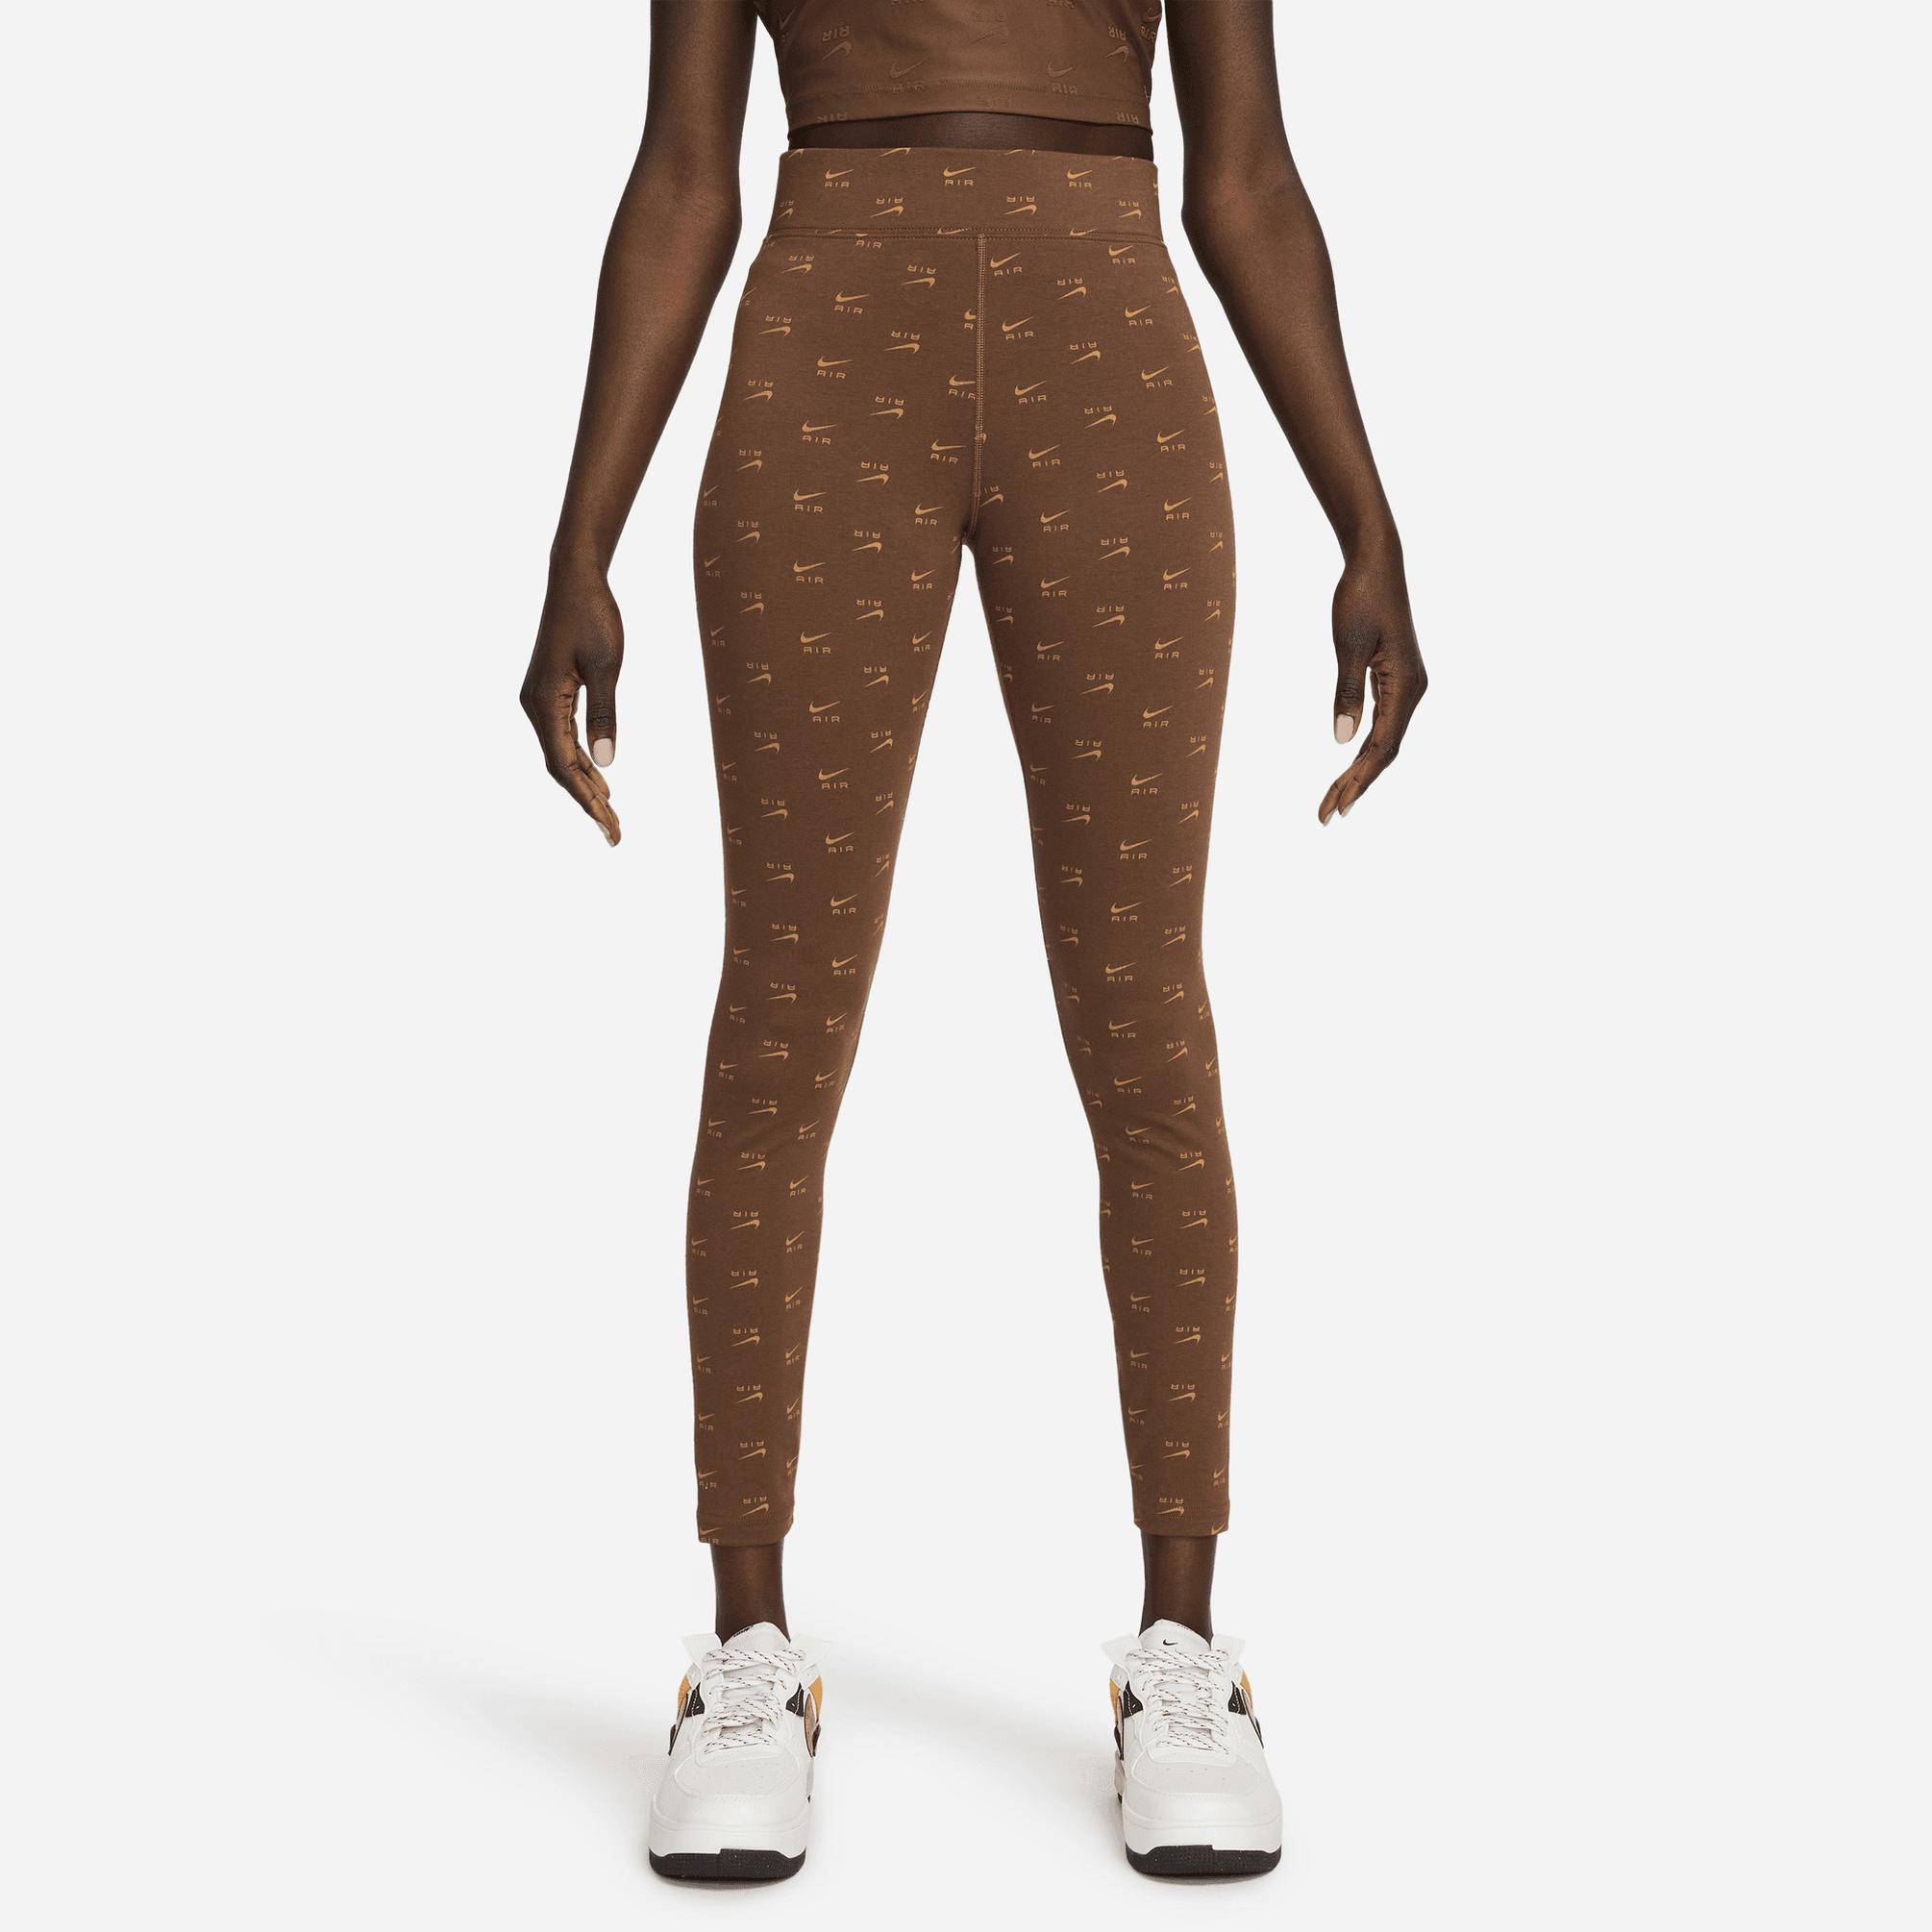  Nike Air Kadın Kahverengi Tayt